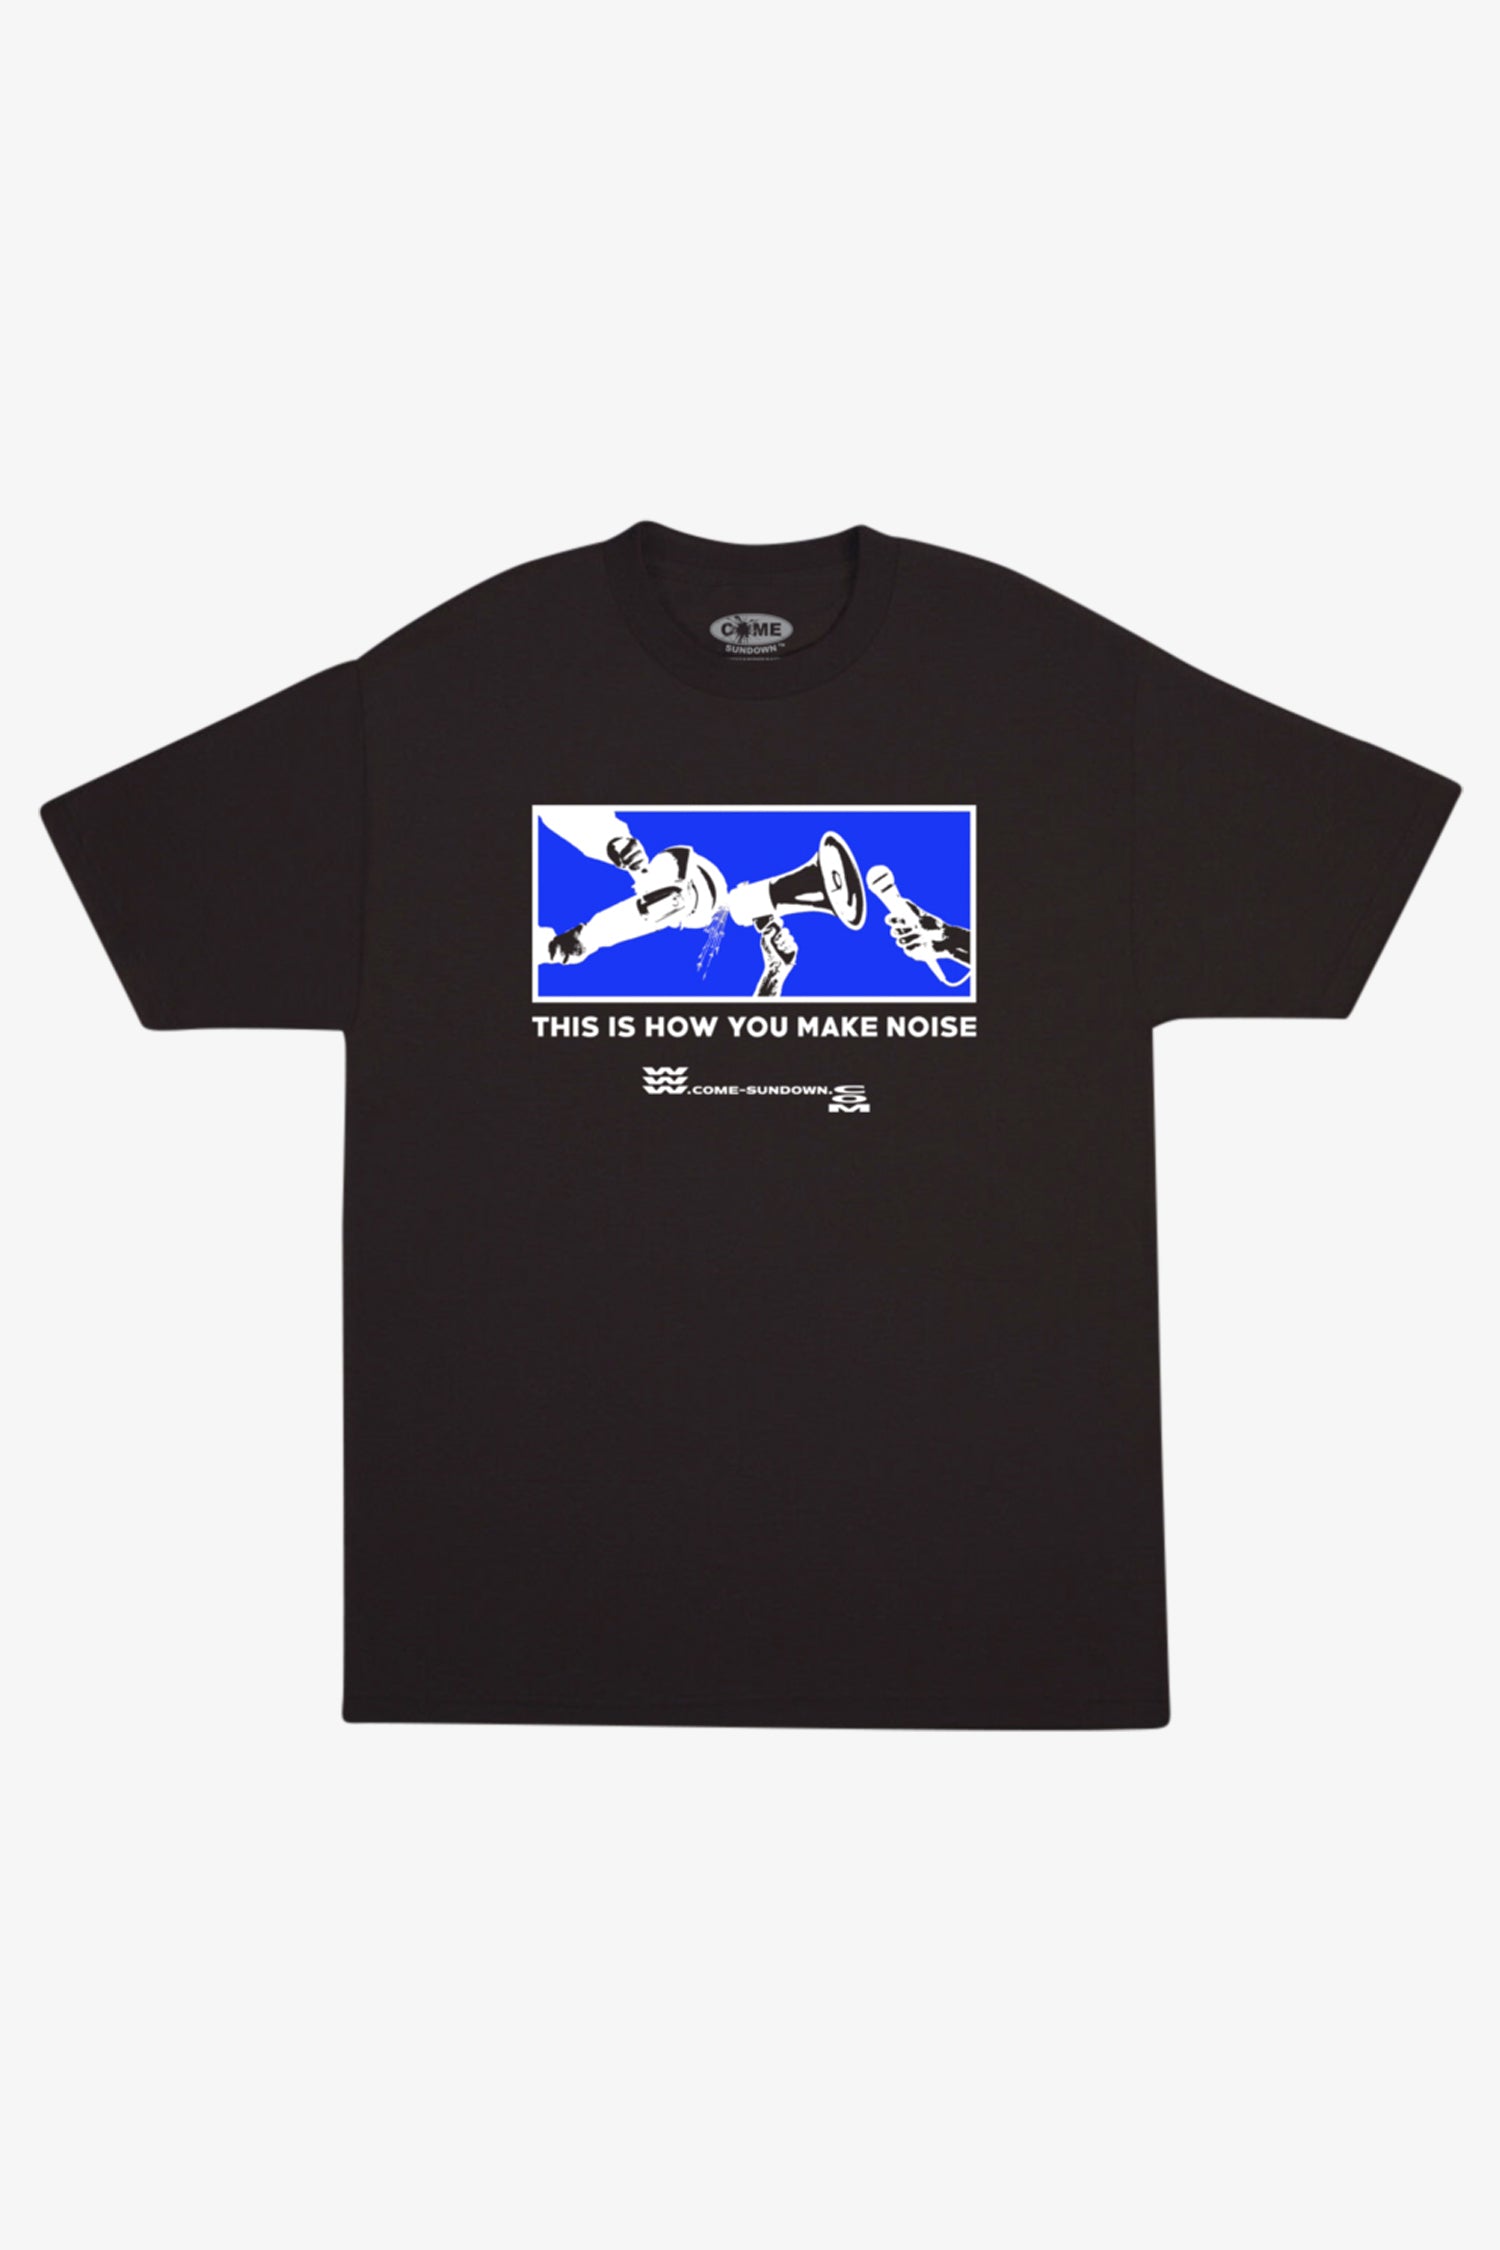 Selectshop FRAME - COME SUNDOWN Noise Tee T-Shirts Dubai